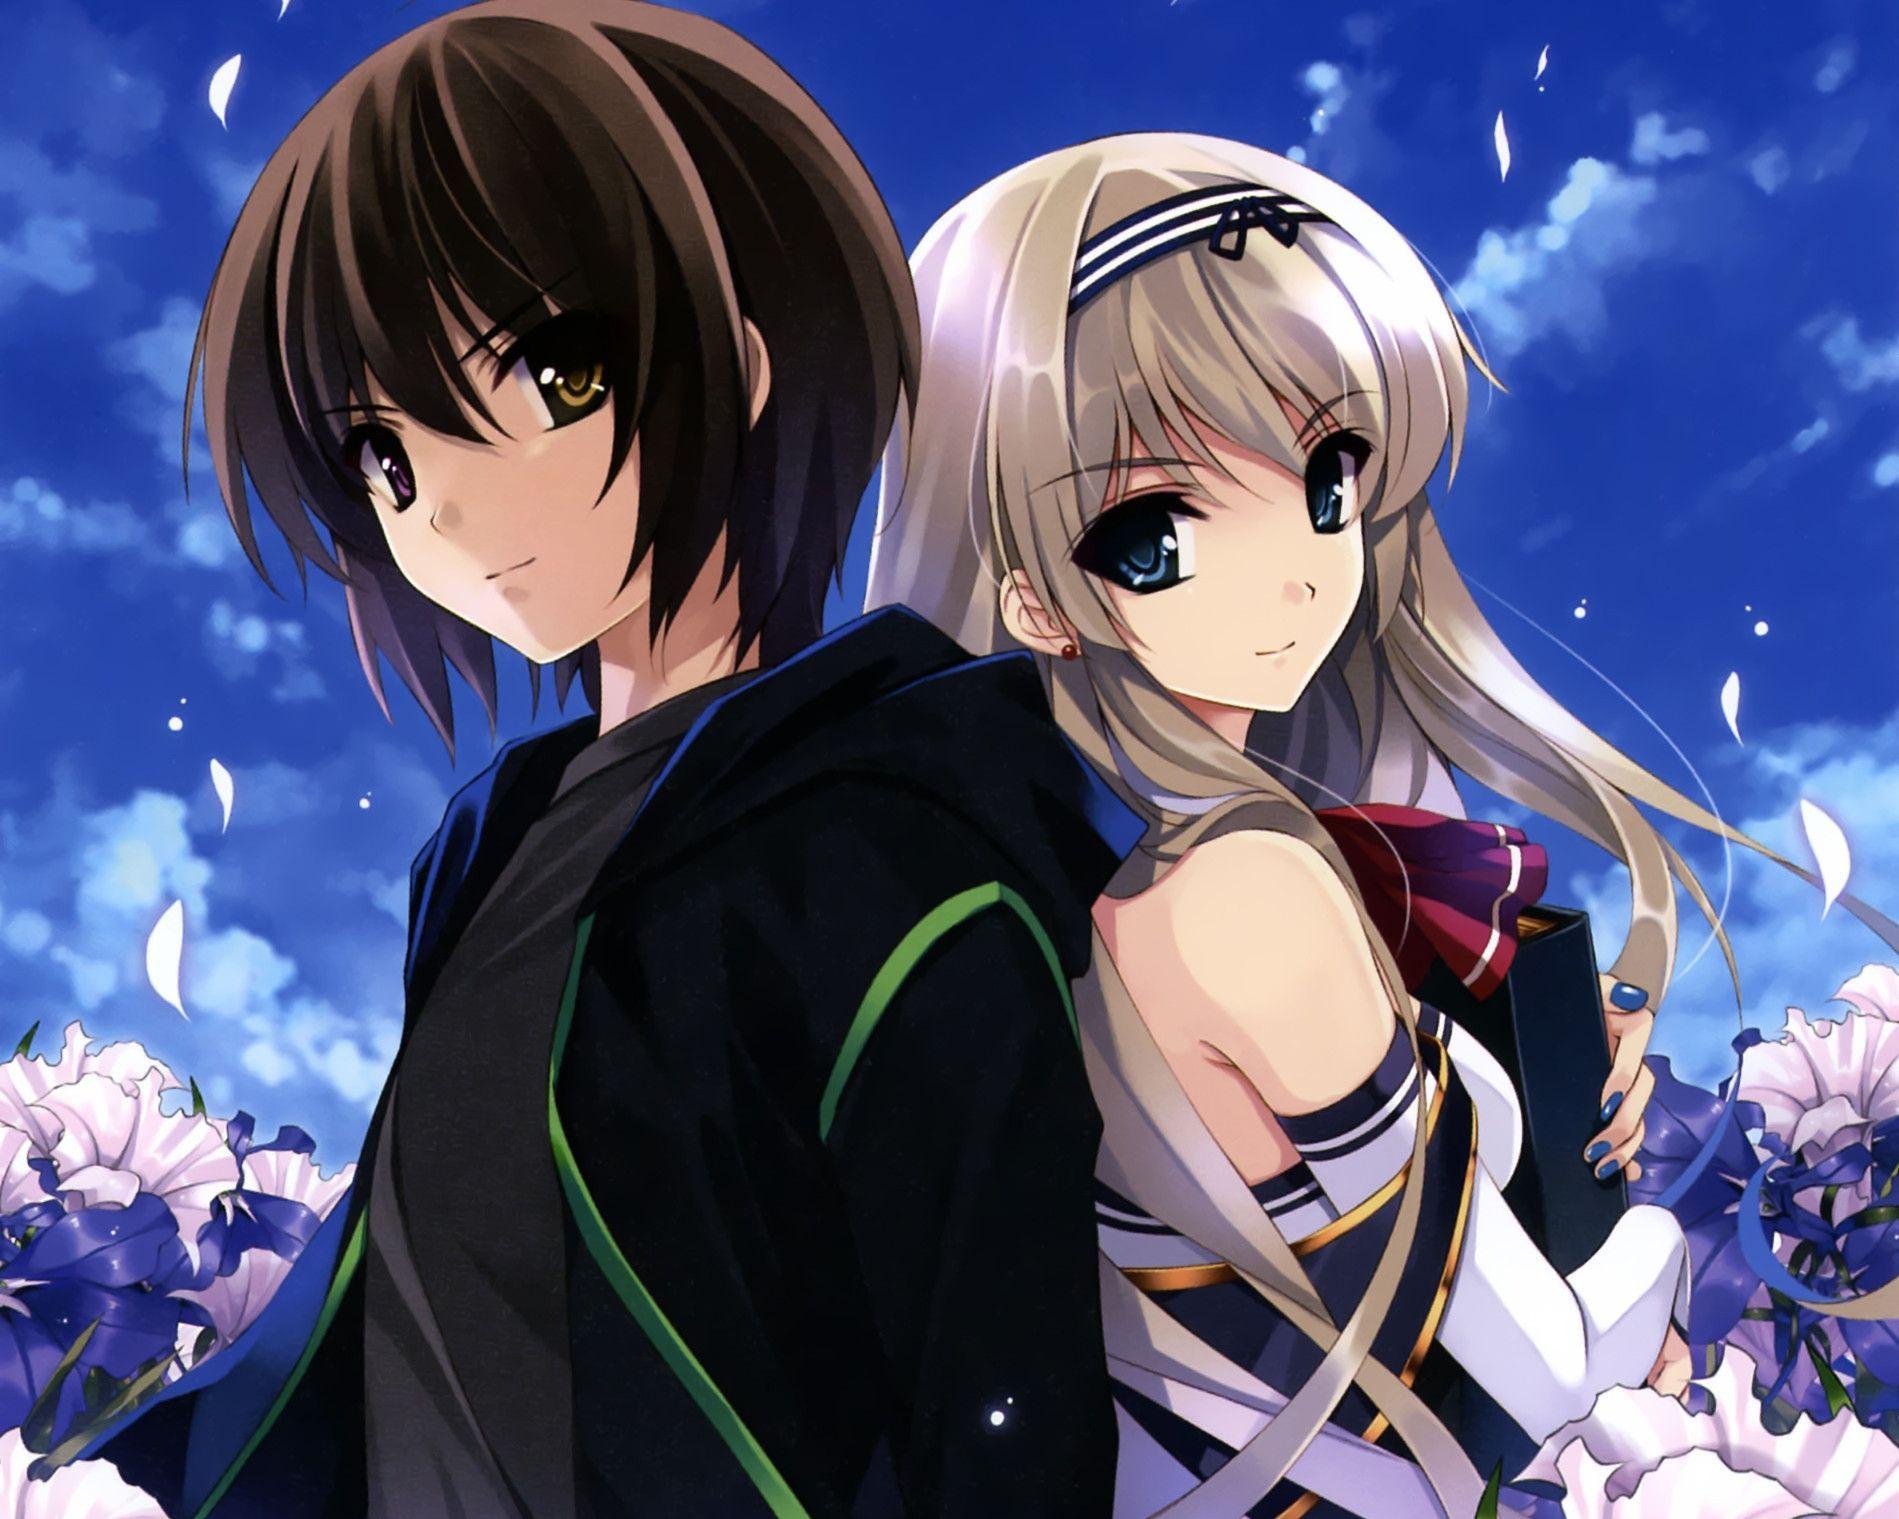 Cute Anime Couples Wallpaper